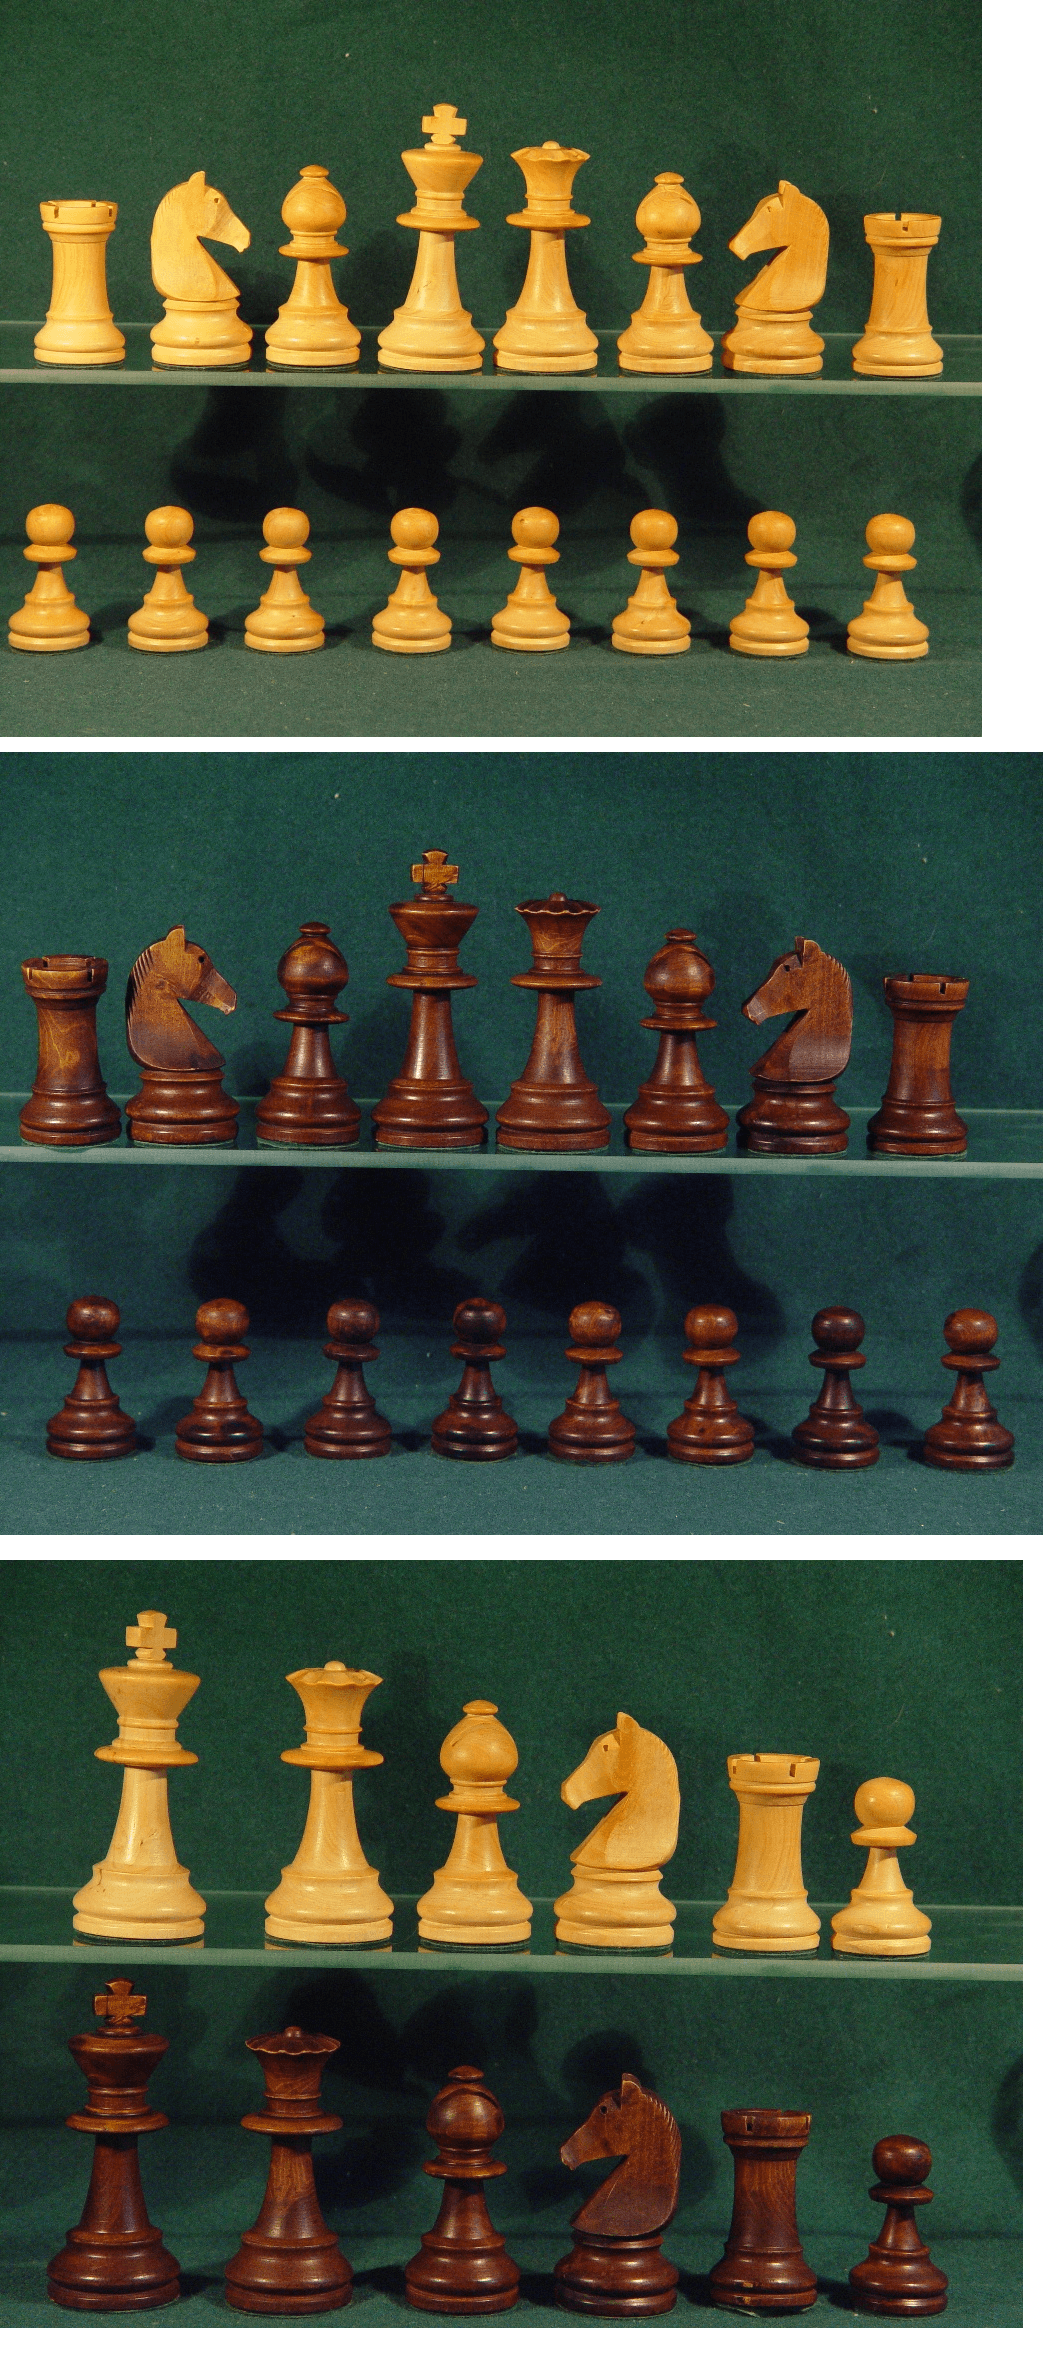 FIDE Chess Set by BeardedJester